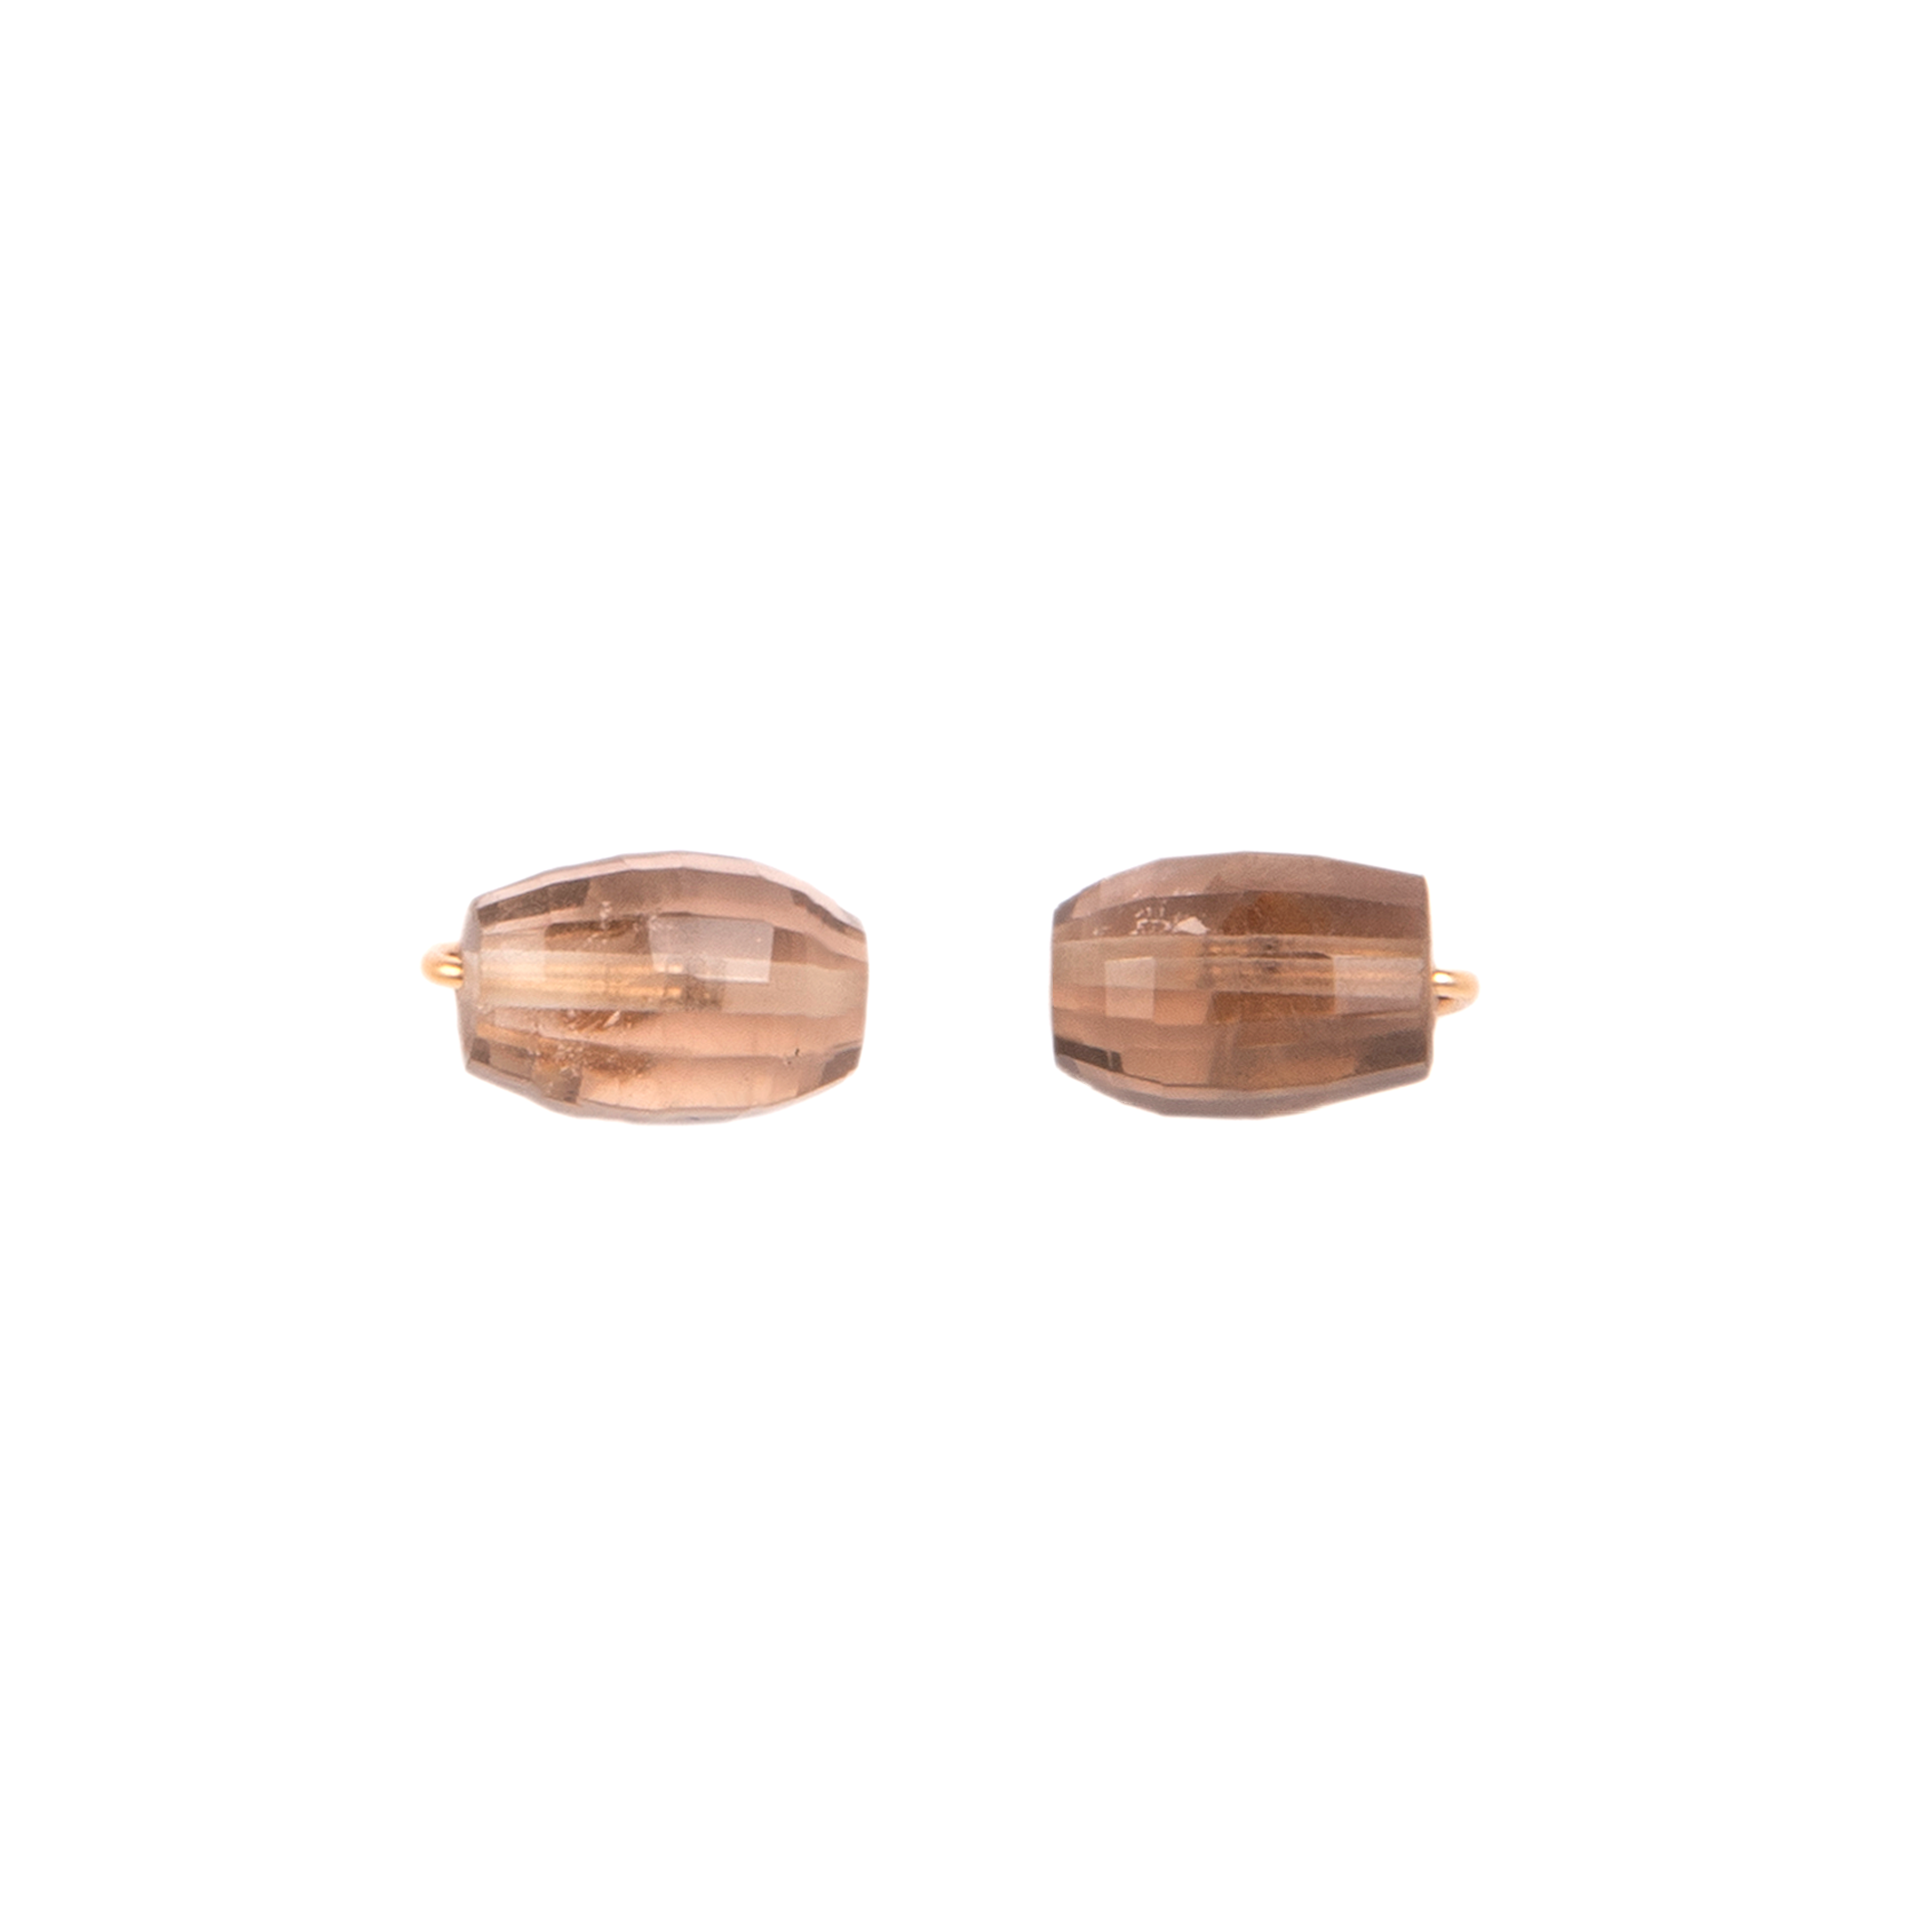 Solitario Earrings #1 (12mm) - Cuarzo Ahumado Earrings TARBAY   